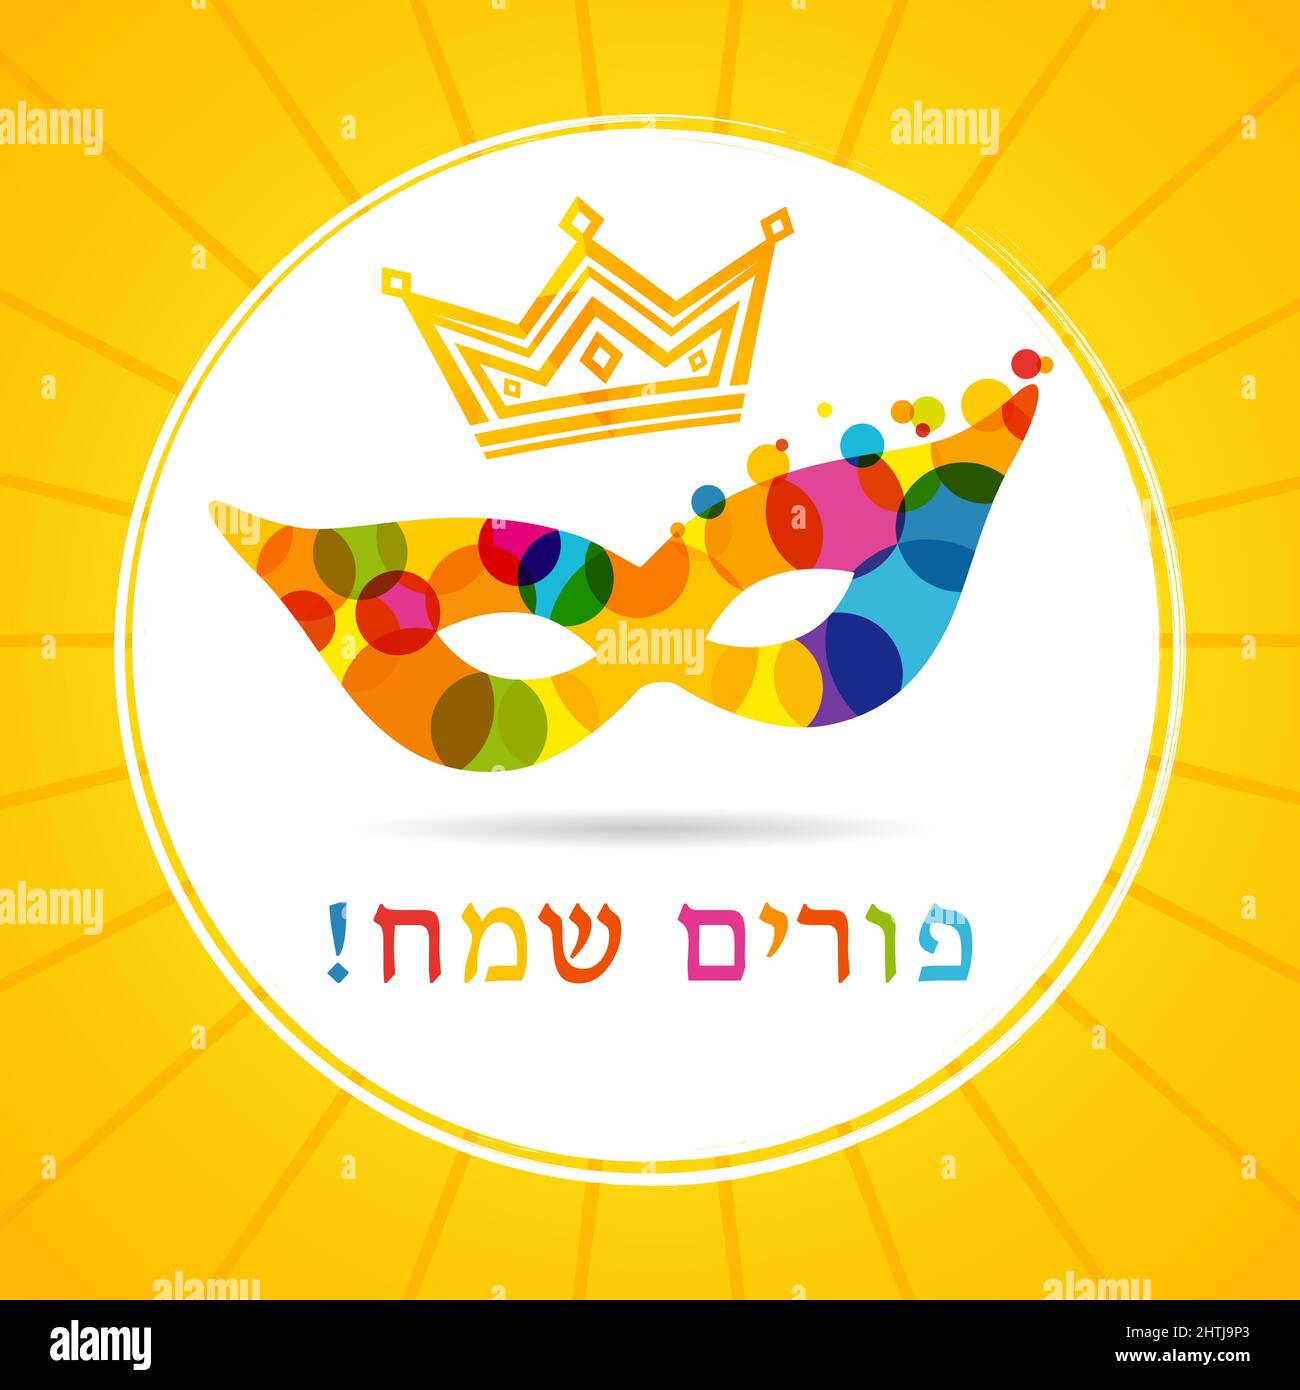 Happy purim congrats and colored confetti. Isolated abstract graphic design template. Happy Purim Jewish script, queen mask, colour backdrop, round lo Stock Vector